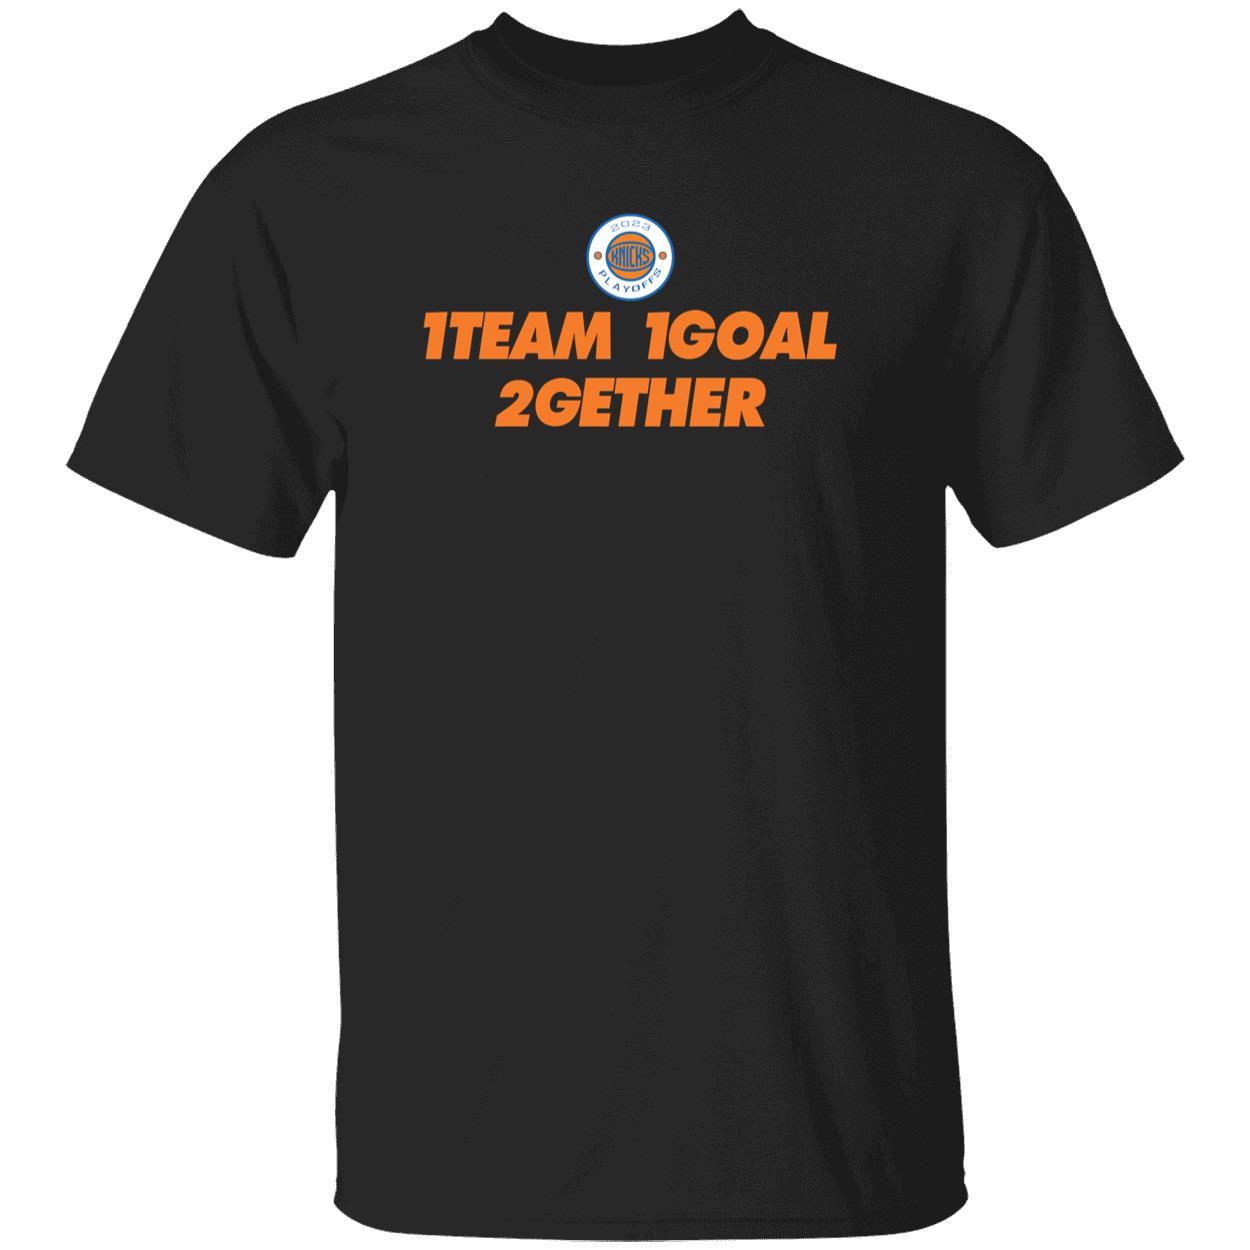 1Team 1 Goal 2Gether Shirt